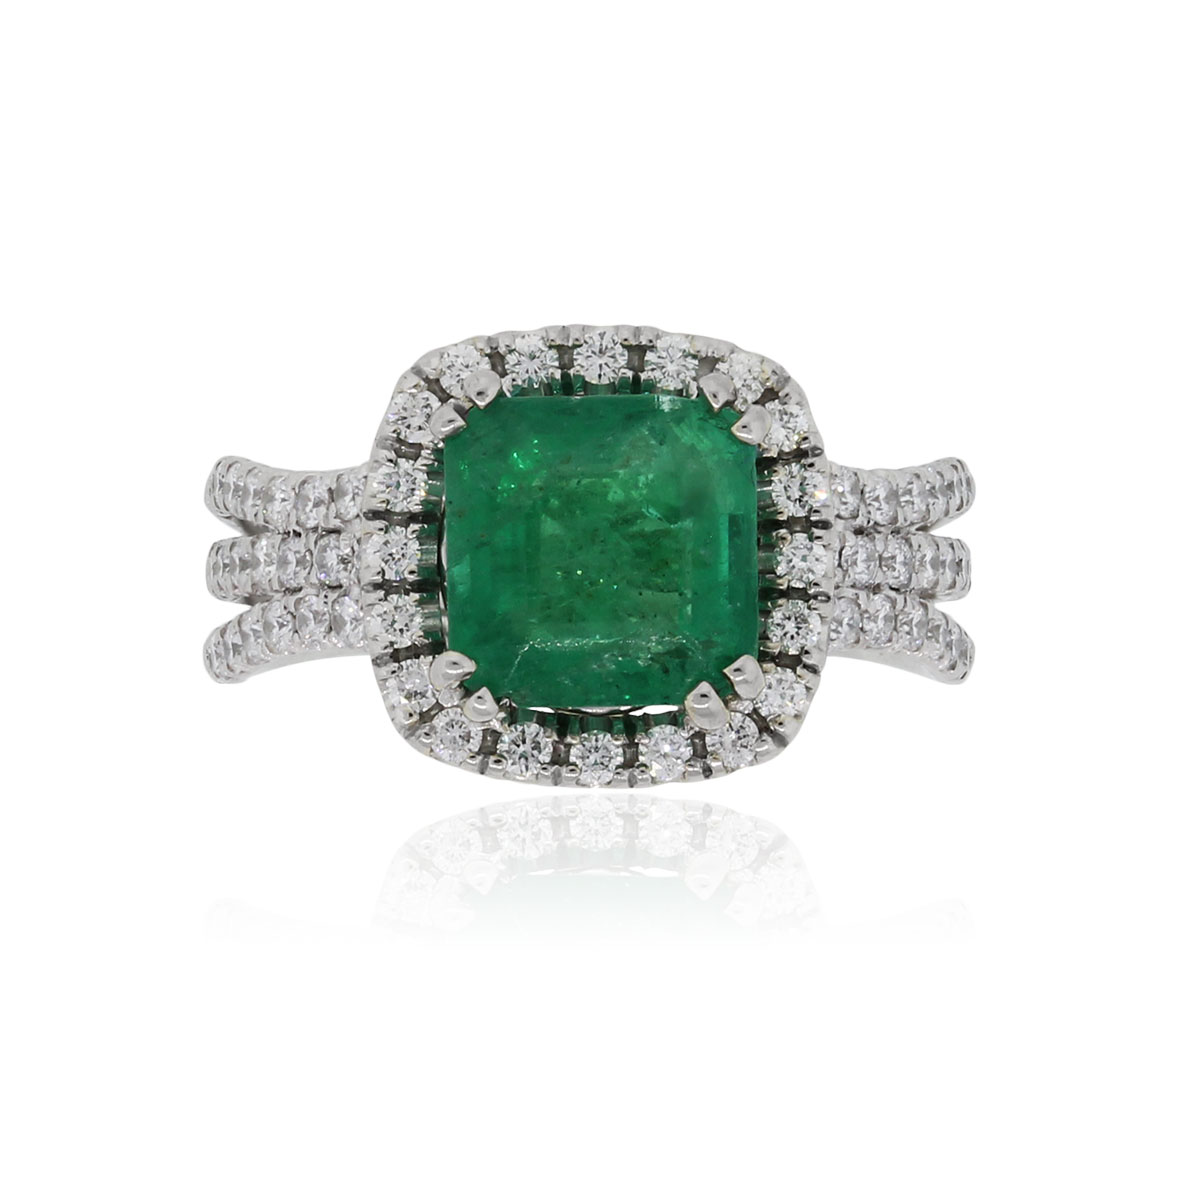 14k White Gold 2ct Cushion Cut Emerald and 0.85ctw Diamond Ring